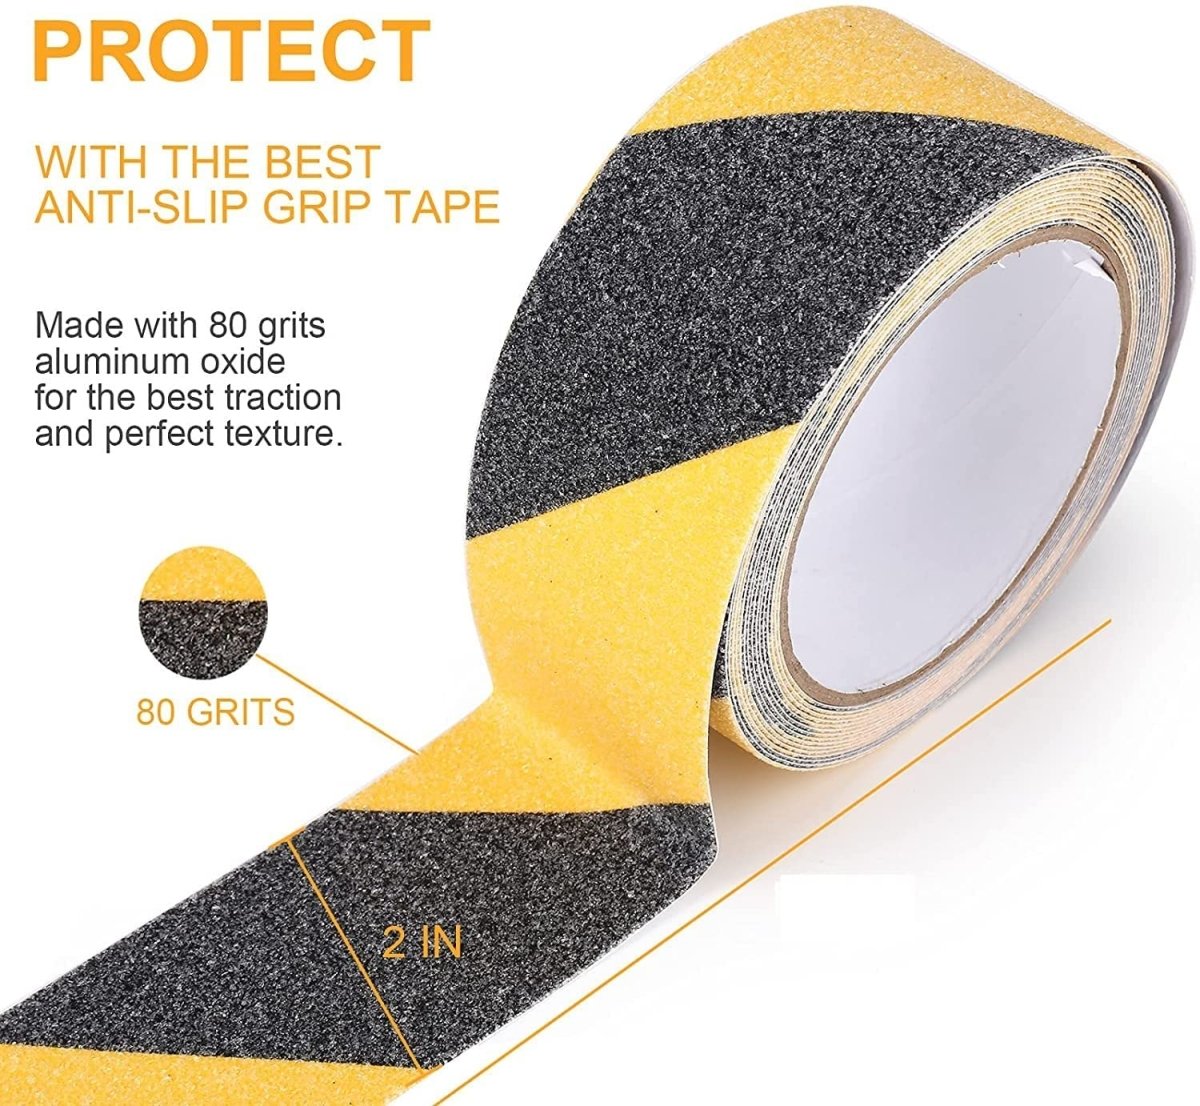 Anti Slip Tape- Black/Yellow (5M x 50MM) Anti Skid Tape- Royalkart - The Urban Store